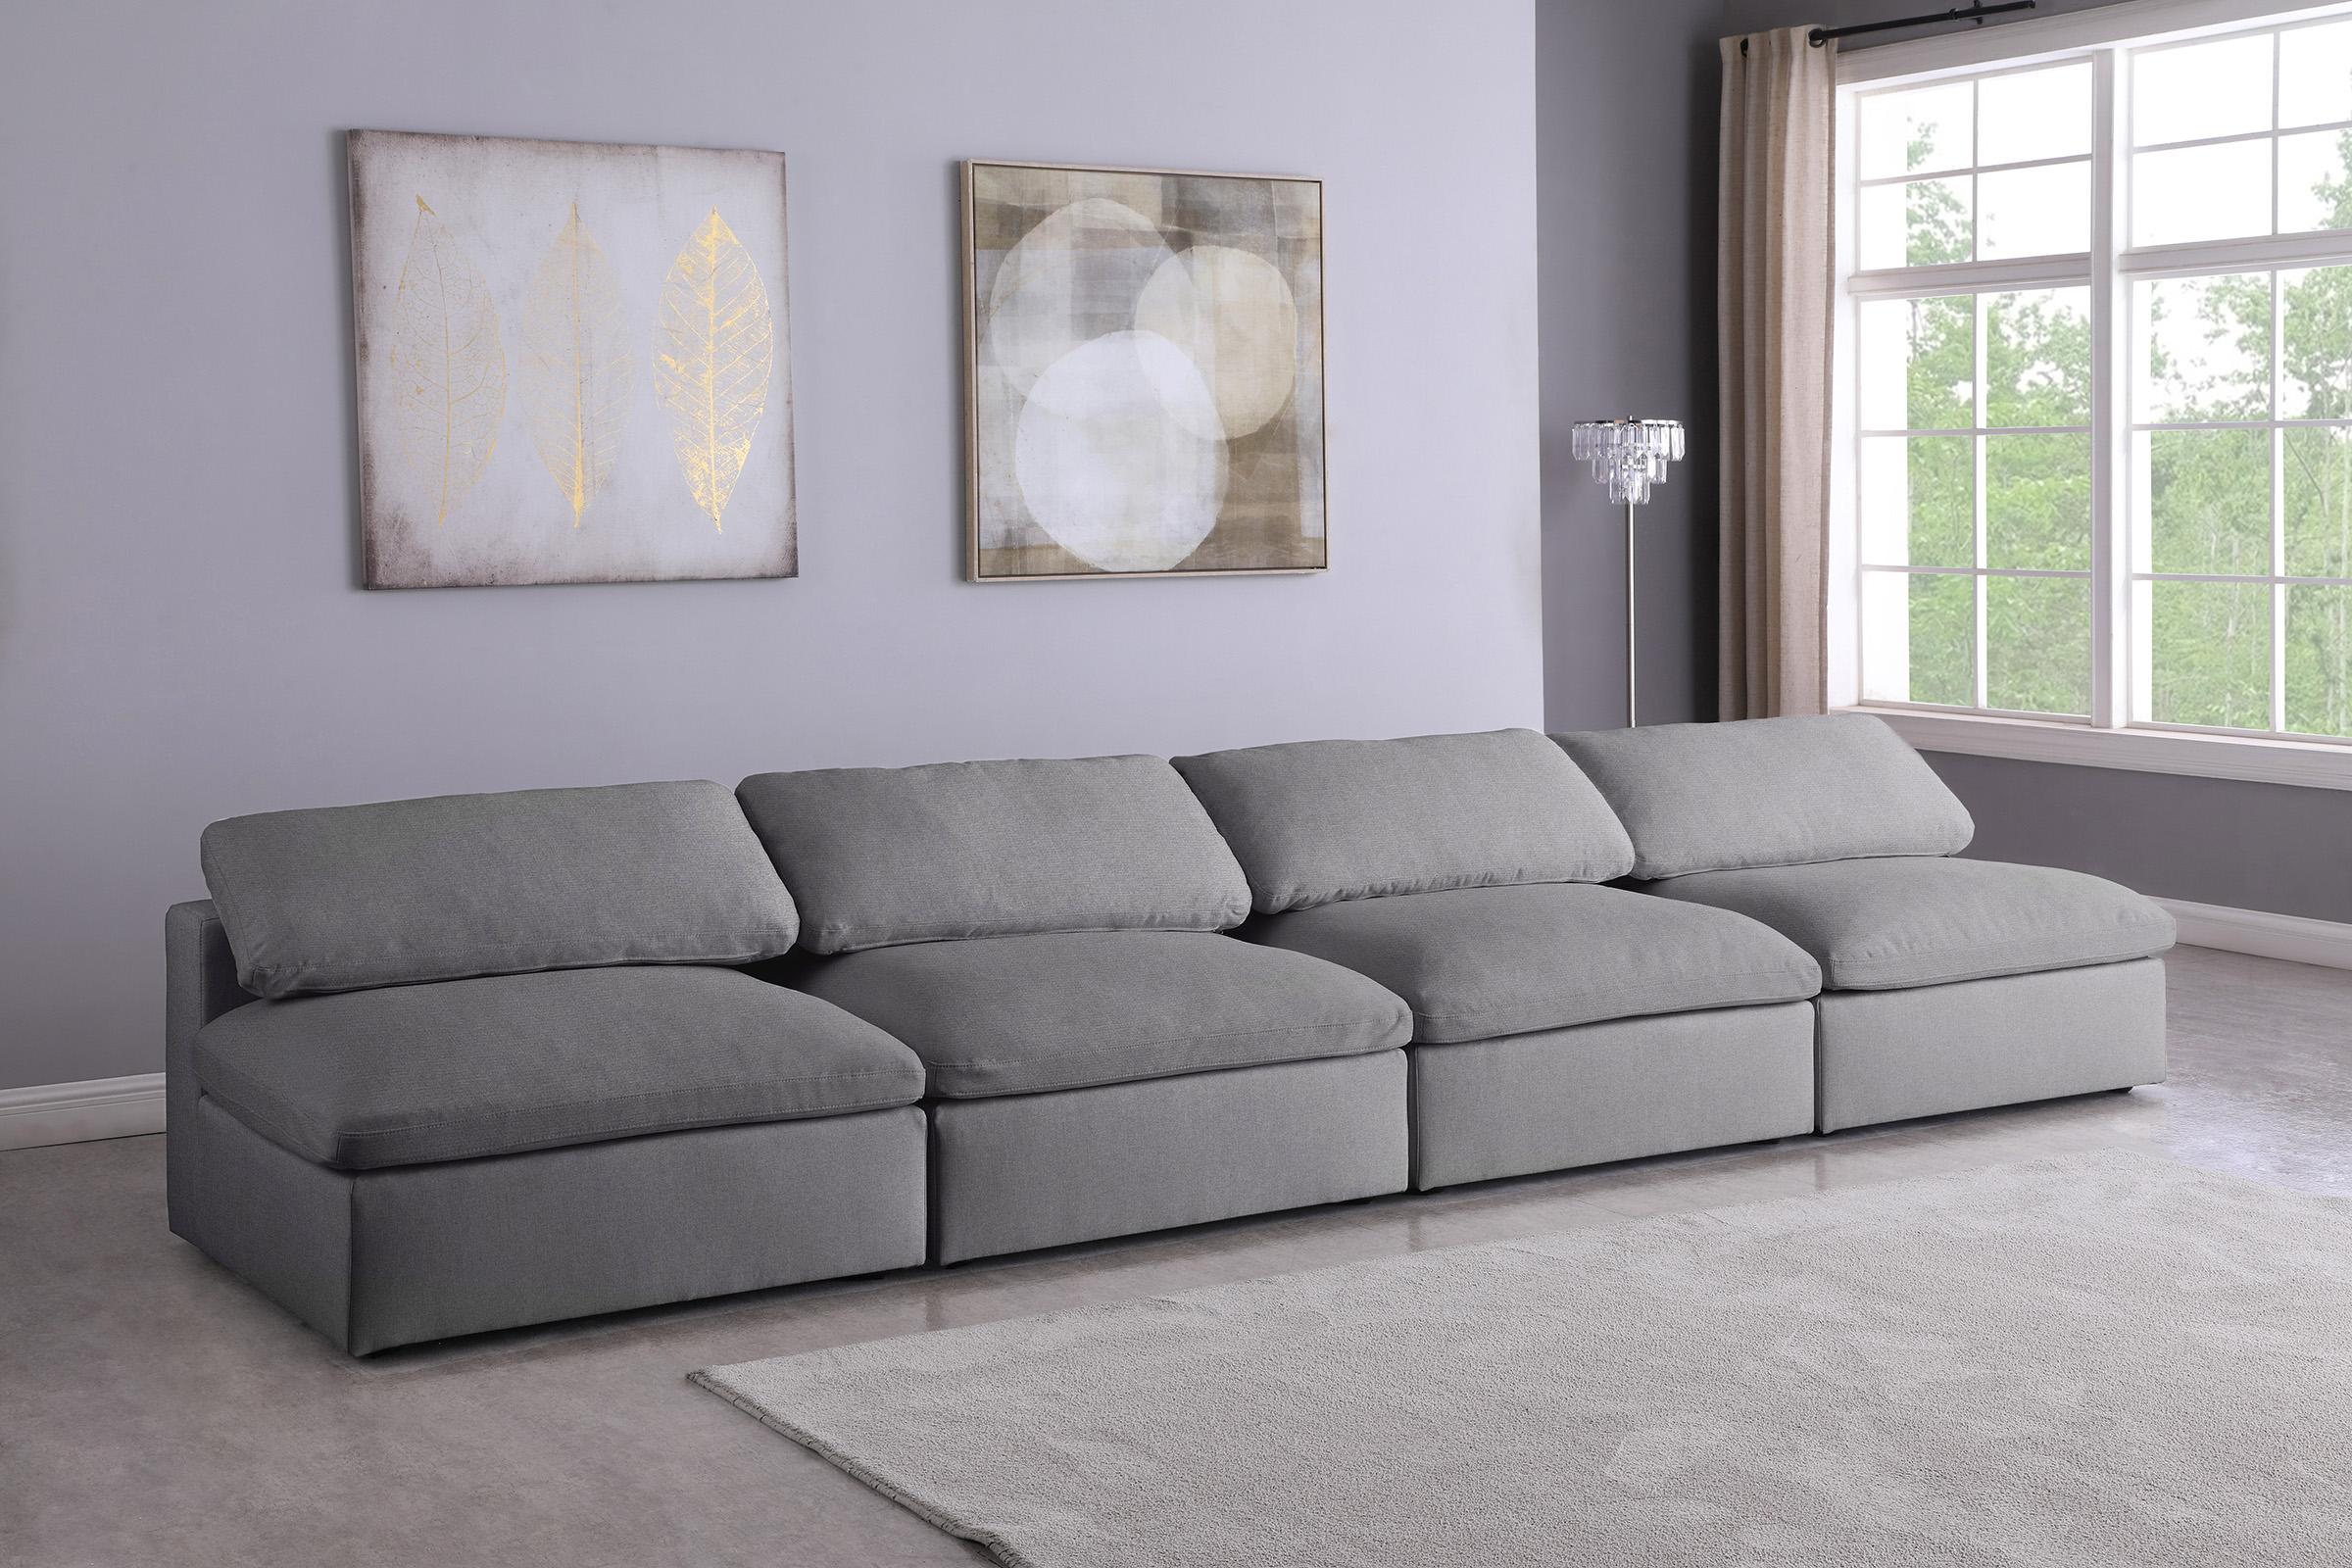 

    
Serene Grey Linen Textured Fabric Deluxe Comfort Modular Armless Sofa S156 Meridian
